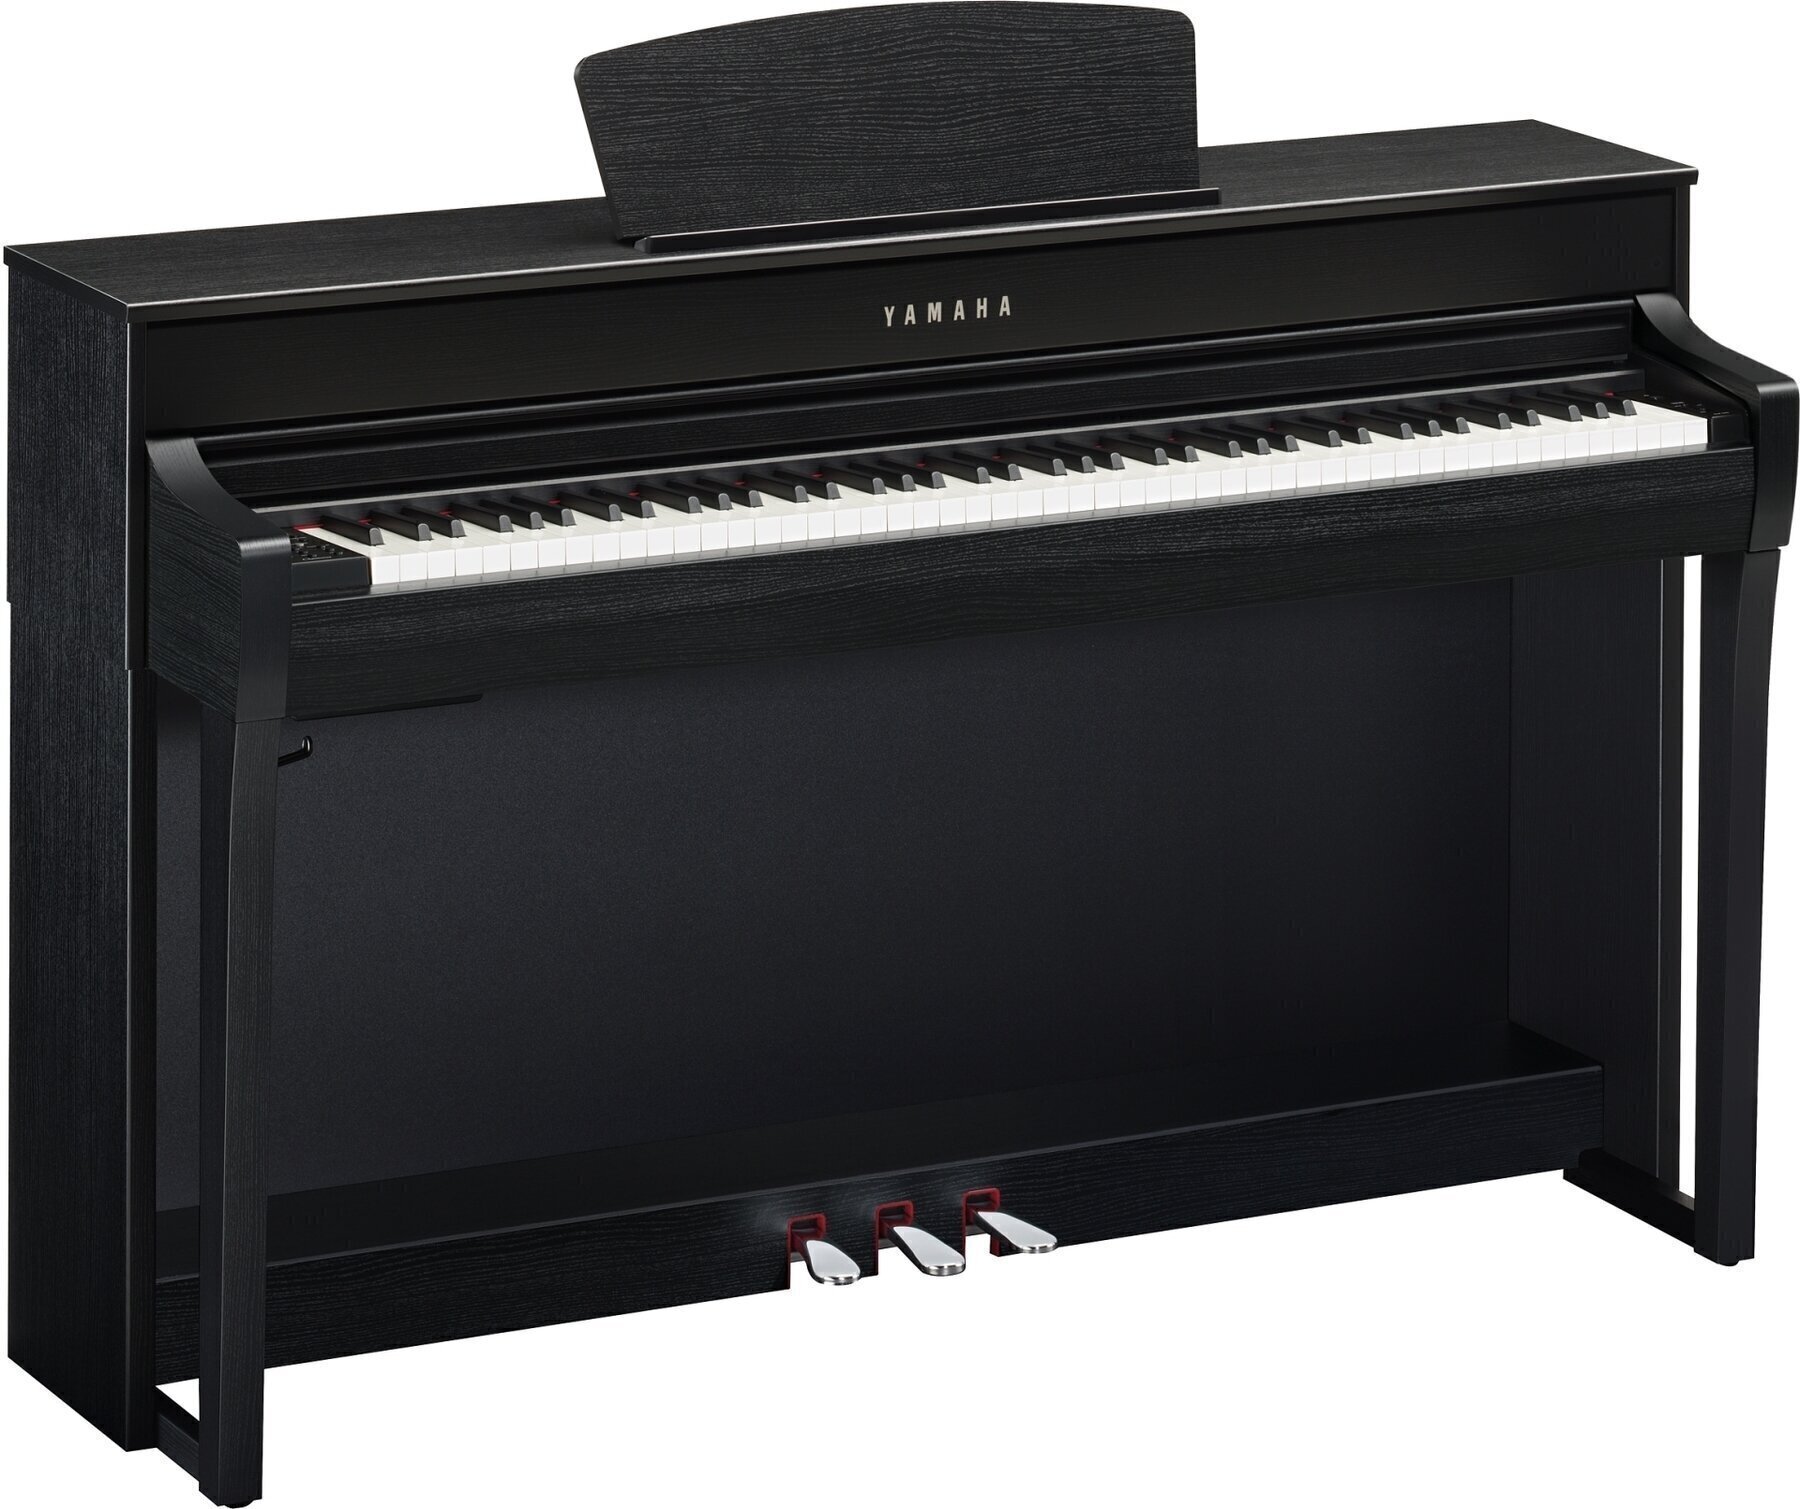 Digital Piano Yamaha CLP 735 Black Digital Piano